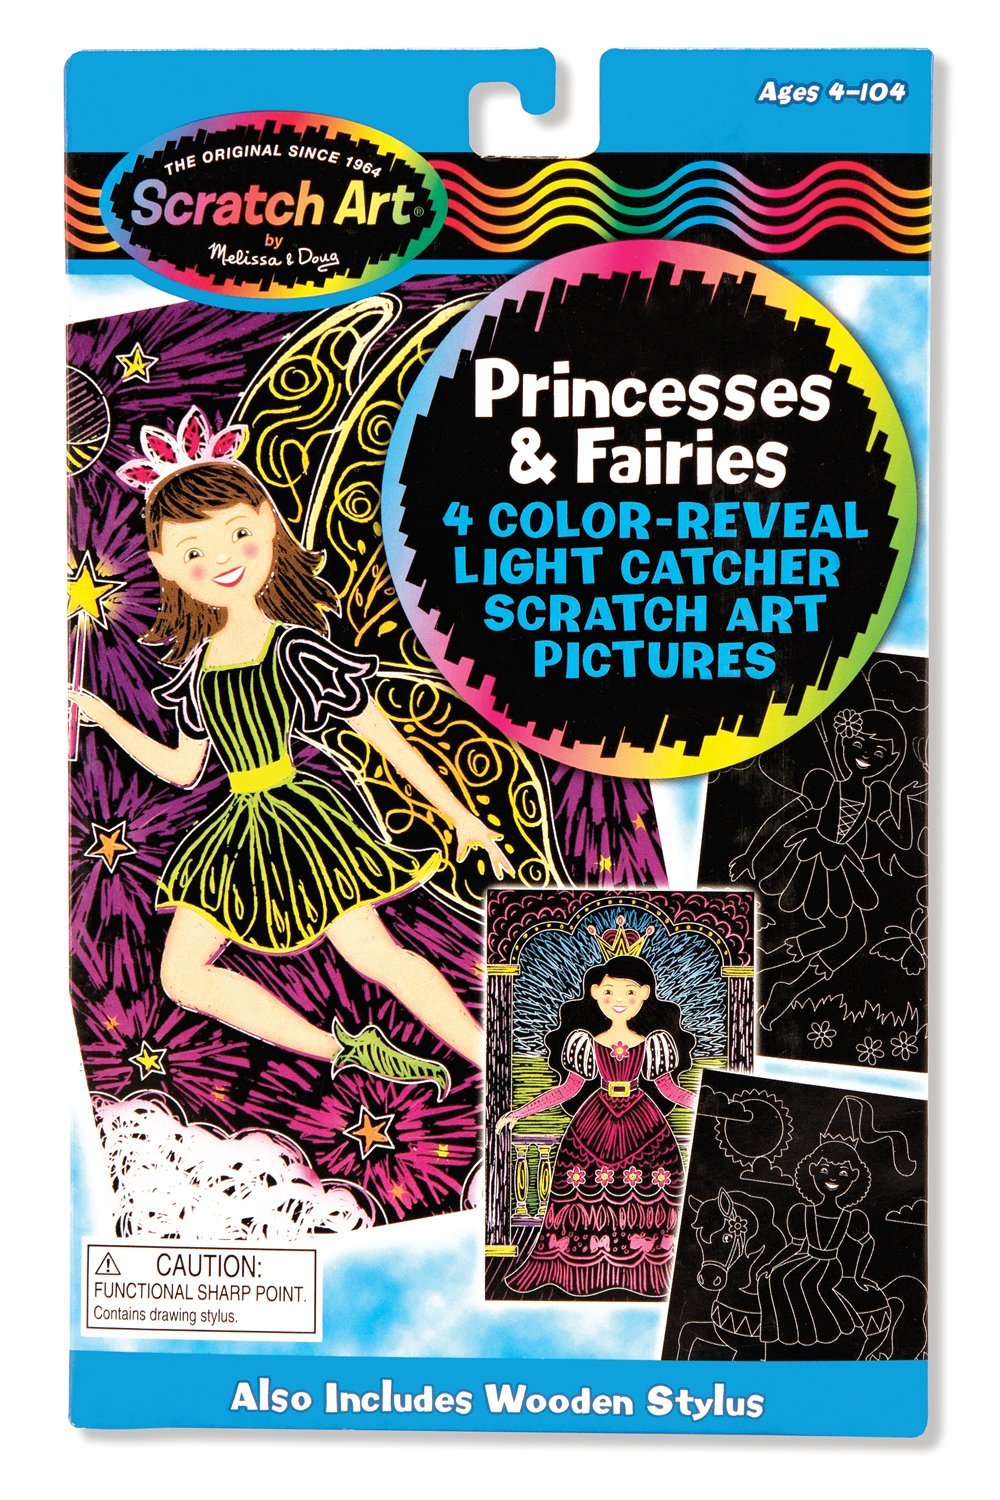 Melissa & Doug  - Scratch Art Color Reveal Light Catcher Pictures Princesses and Fairies Ages 4 to 104 [Home Decor]- Olde Church Emporium